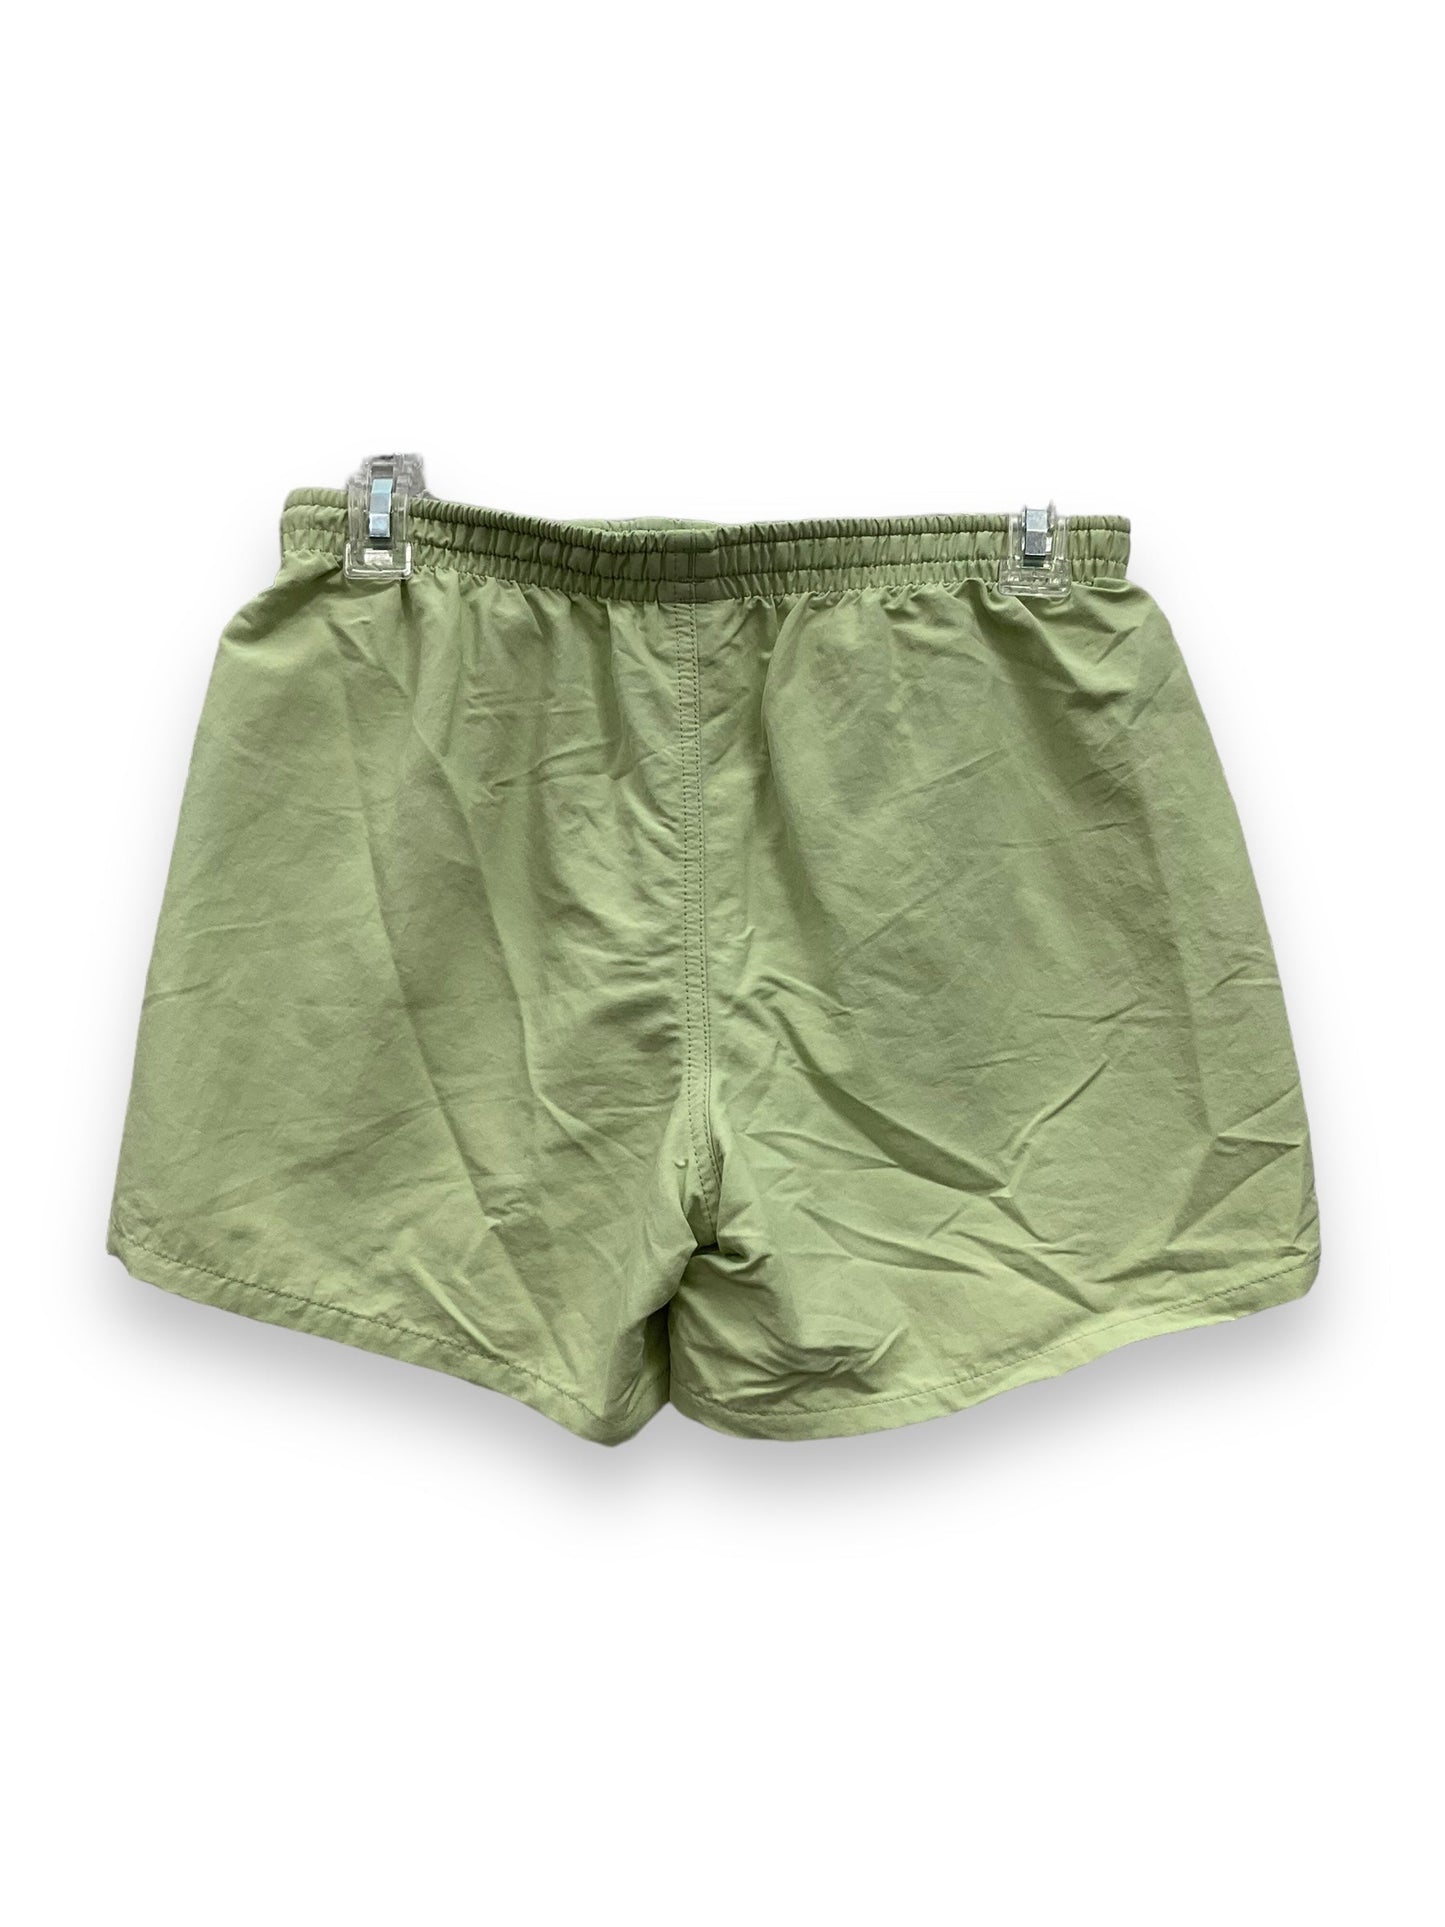 Green Athletic Shorts Patagonia, Size Xs